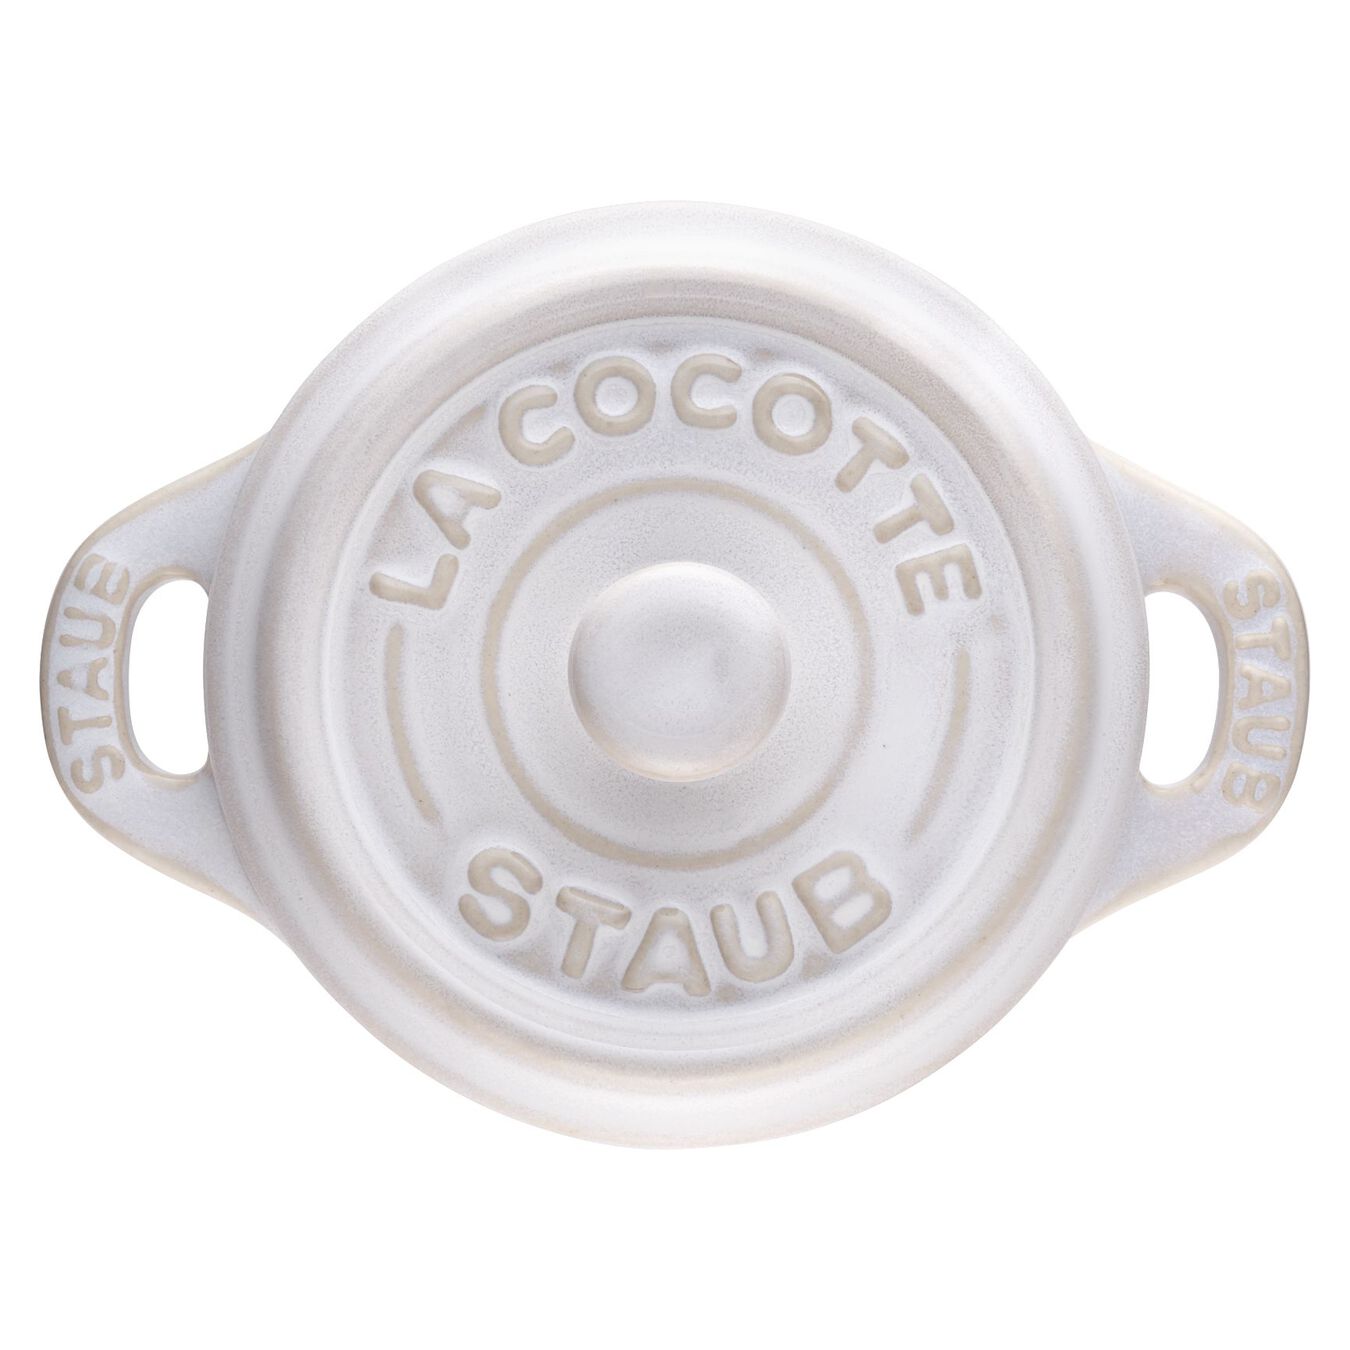 Mini cocotte rotonda - 10 cm, avorio,,large 5